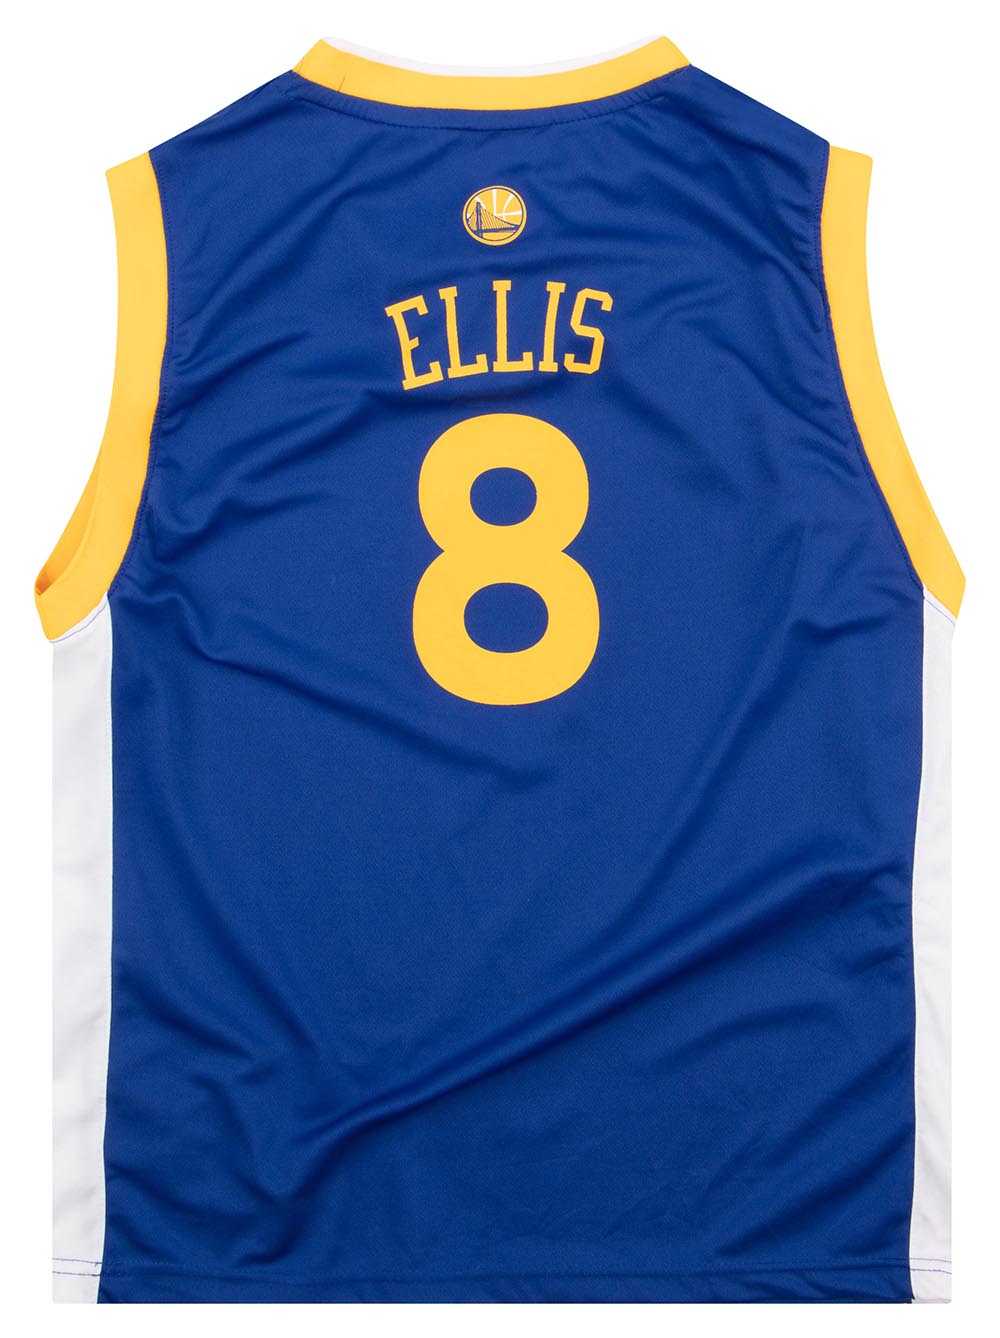 Adidas Golden State Warriors Monta Ellis Hardwood Classics Jersey XL Nba Hwc